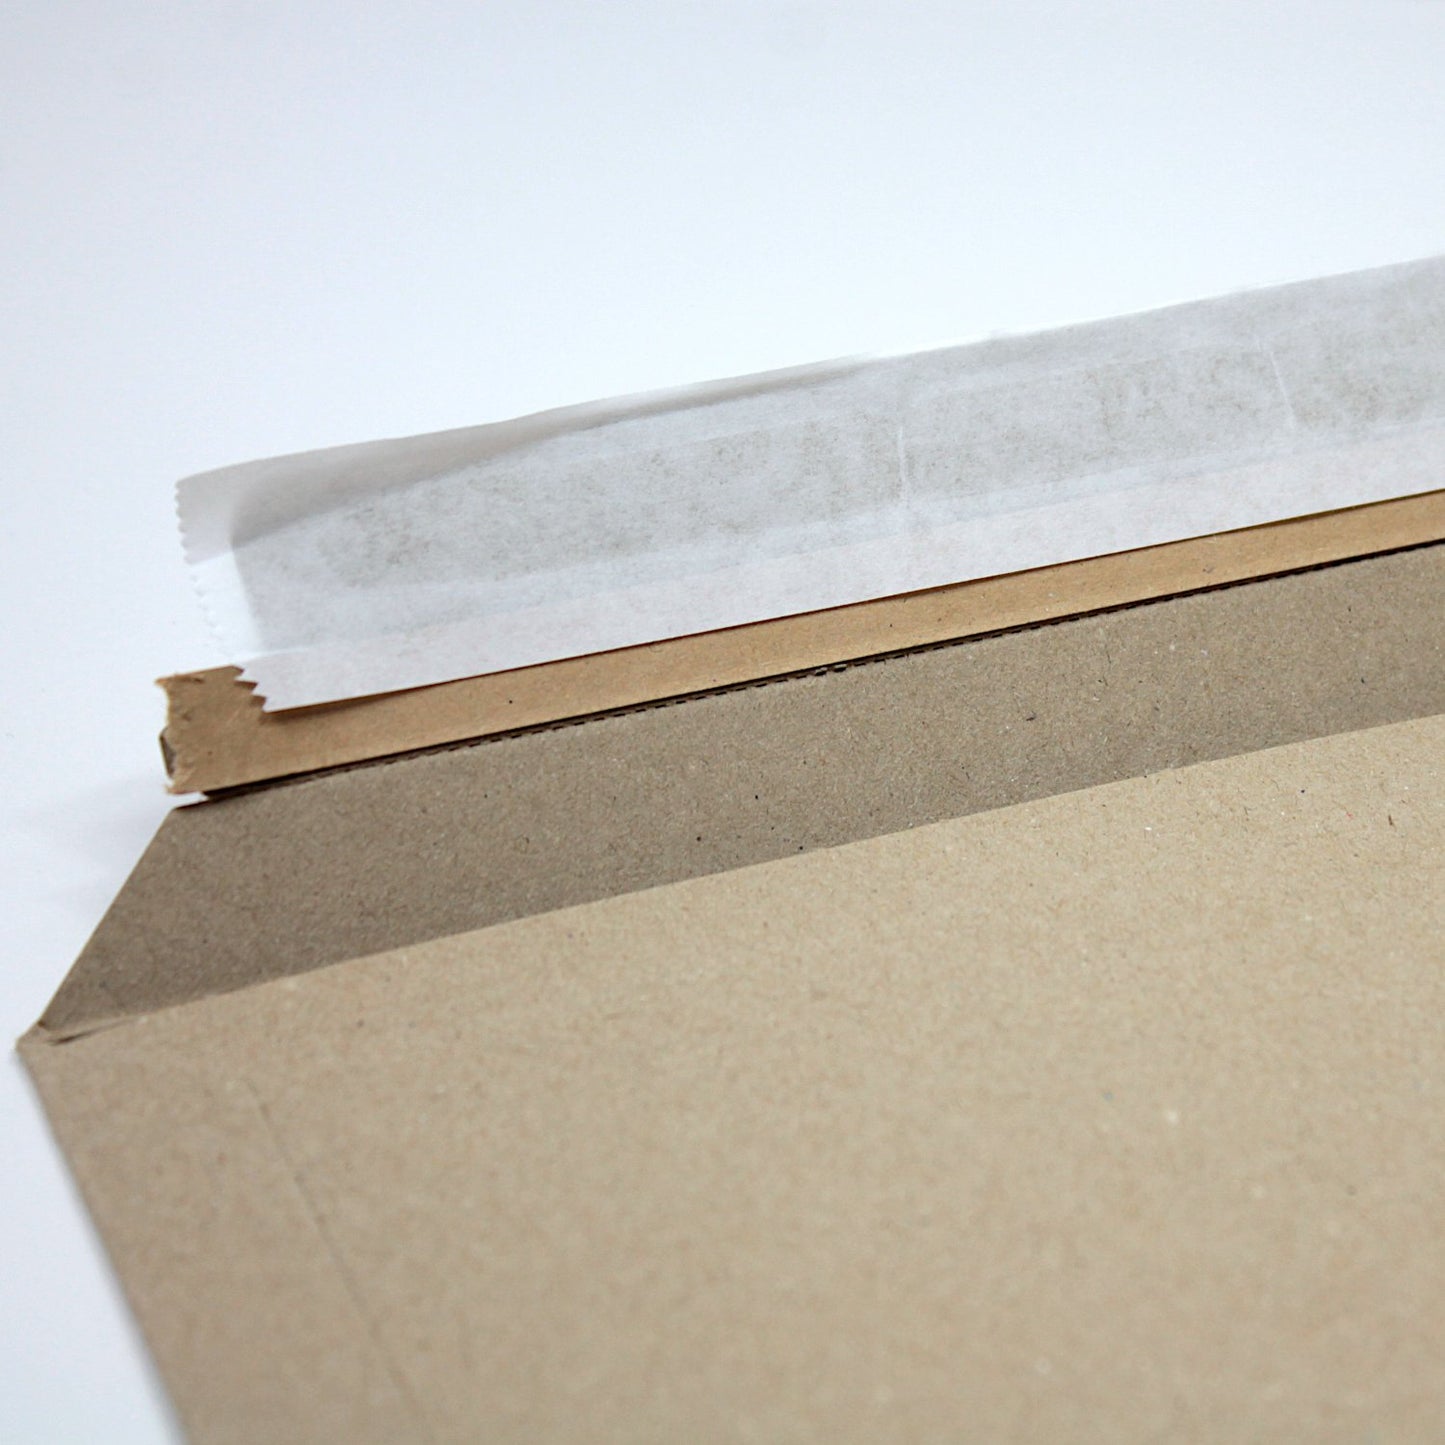 180 x 235mm Brown Cardboard Envelopes - Pack of 100